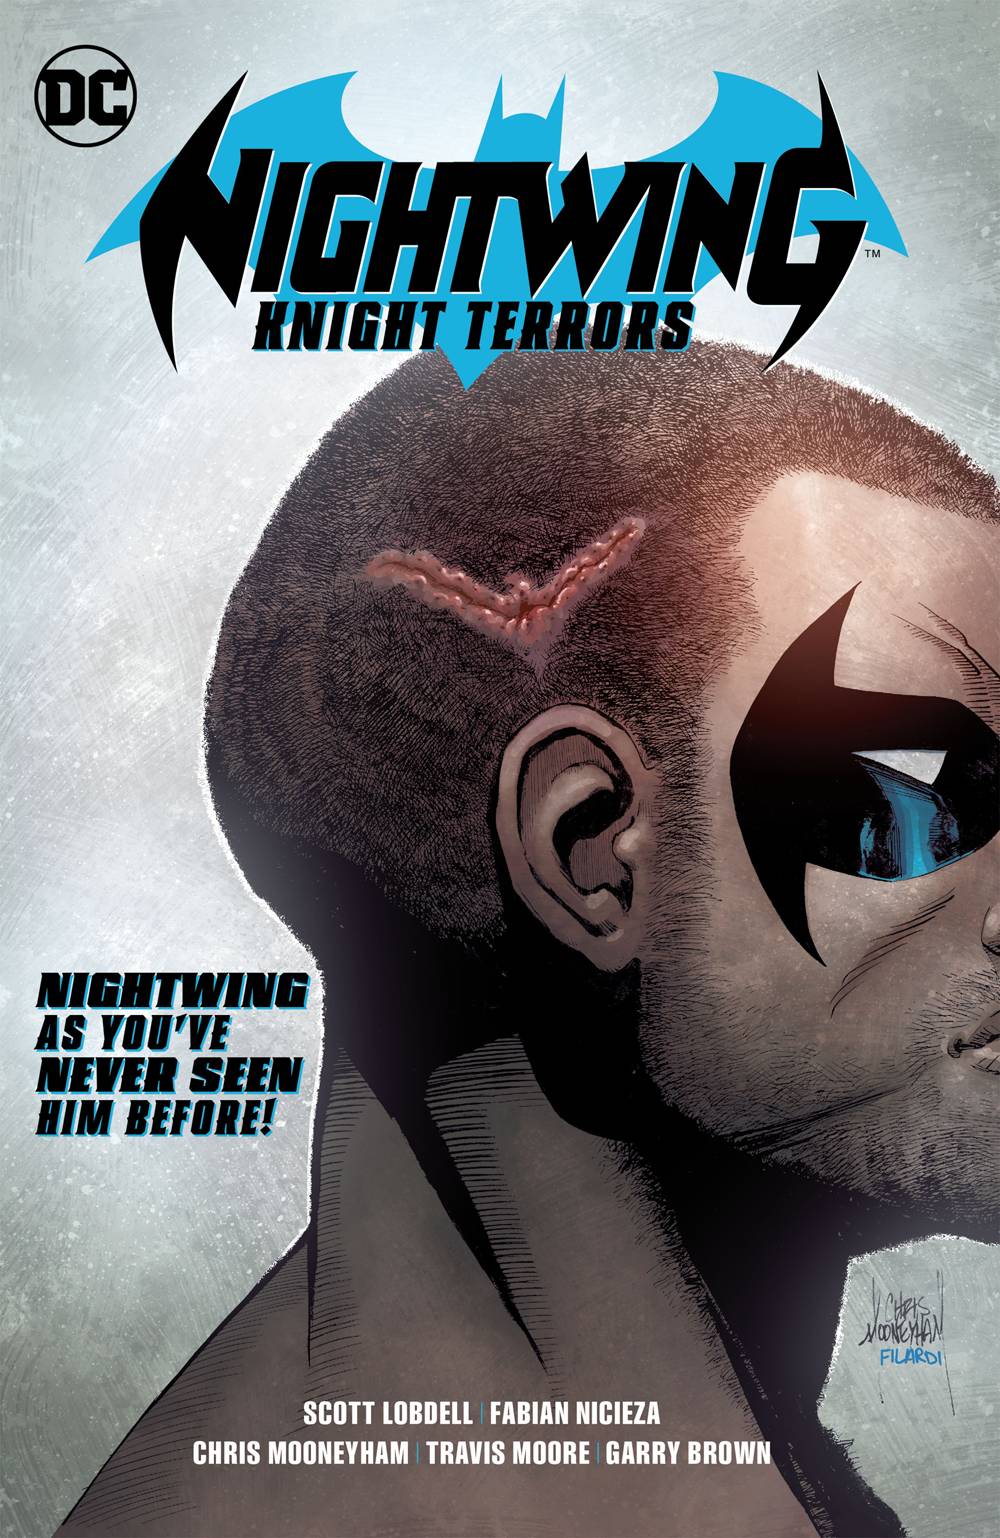 Nightwing Knight Terrors TP - Books